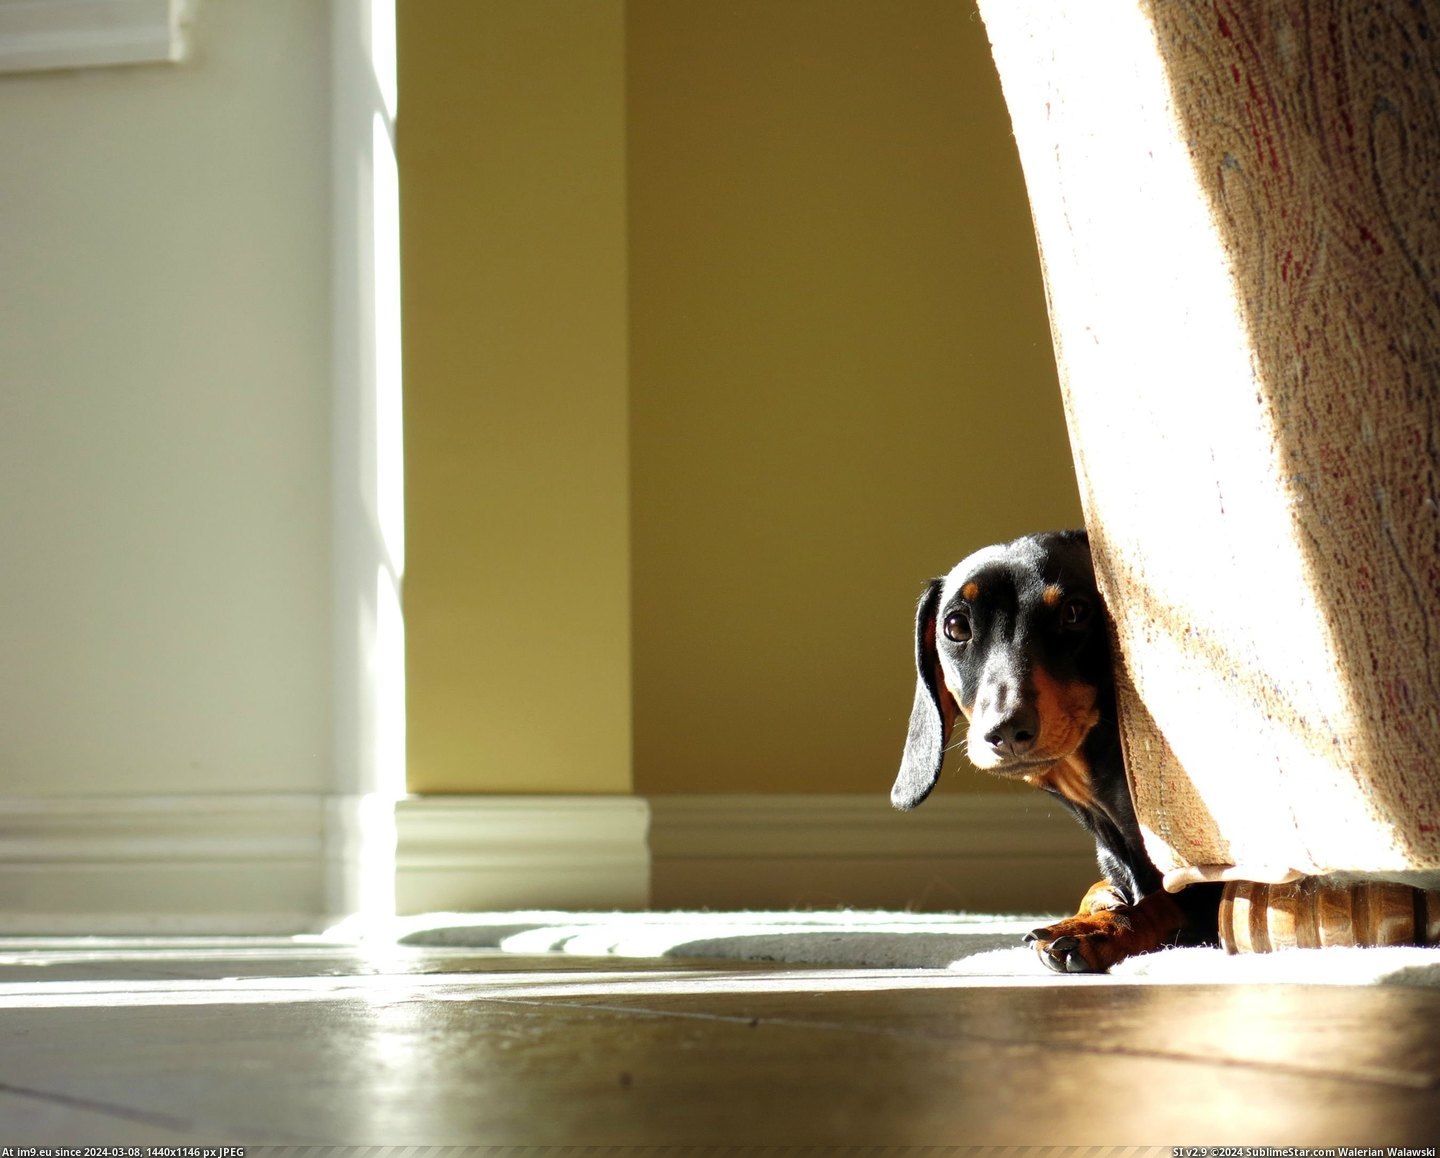 #Puppy #Dachshund #Shy [Aww] My Dachshund puppy is really shy. Pic. (Obraz z album My r/AWW favs))